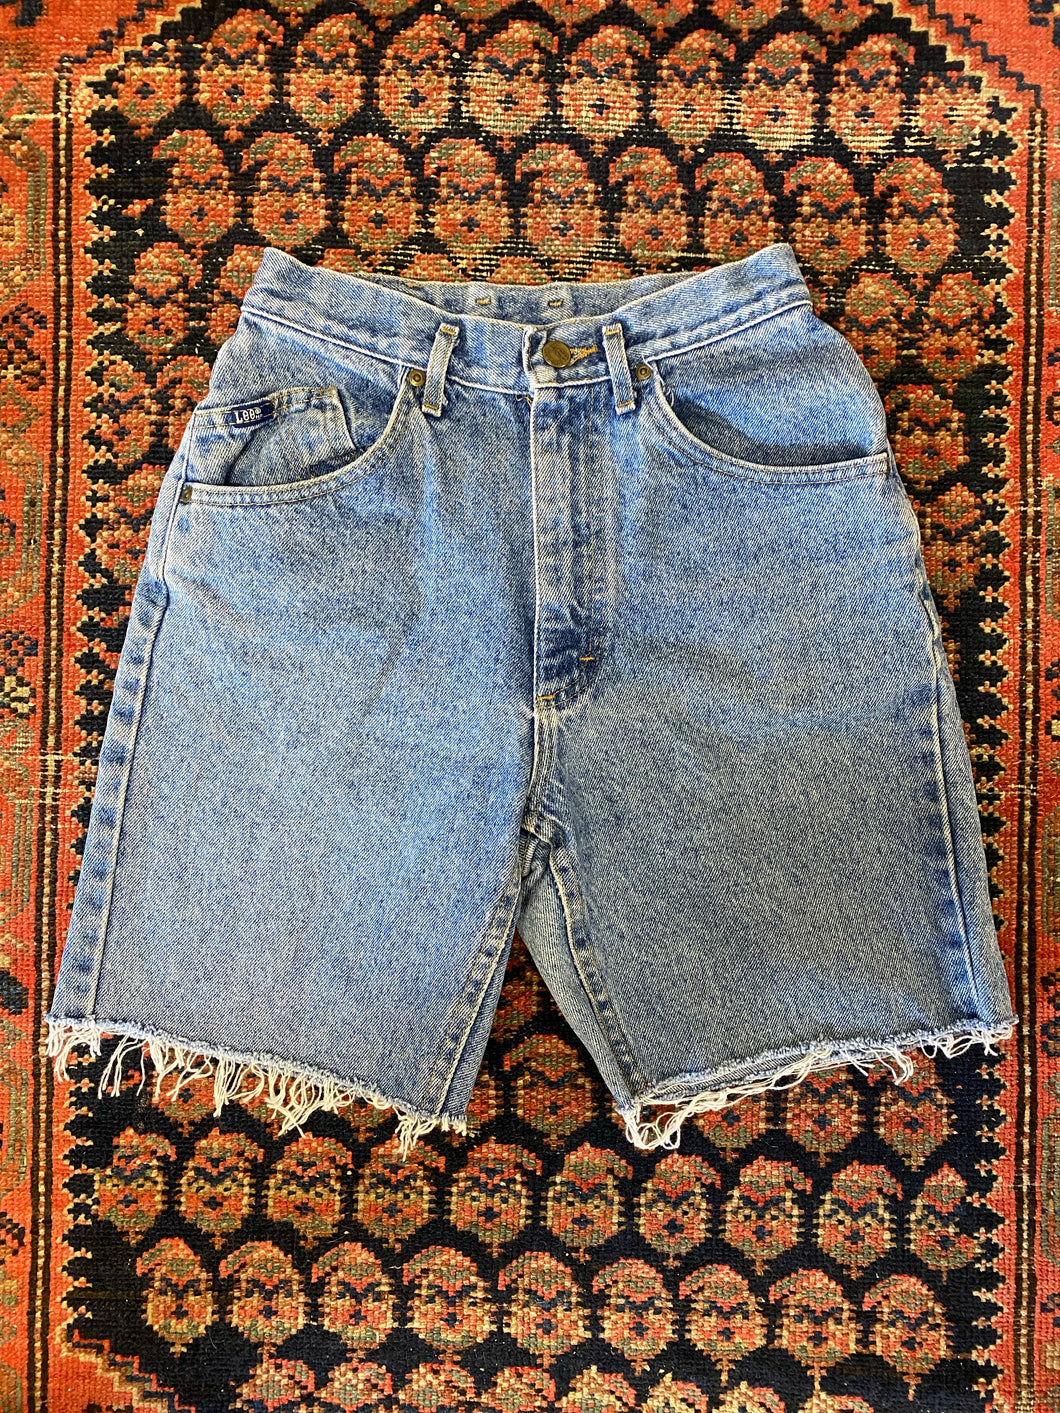 Vintage High Waisted Frayed Levis Denim Shorts - 25in